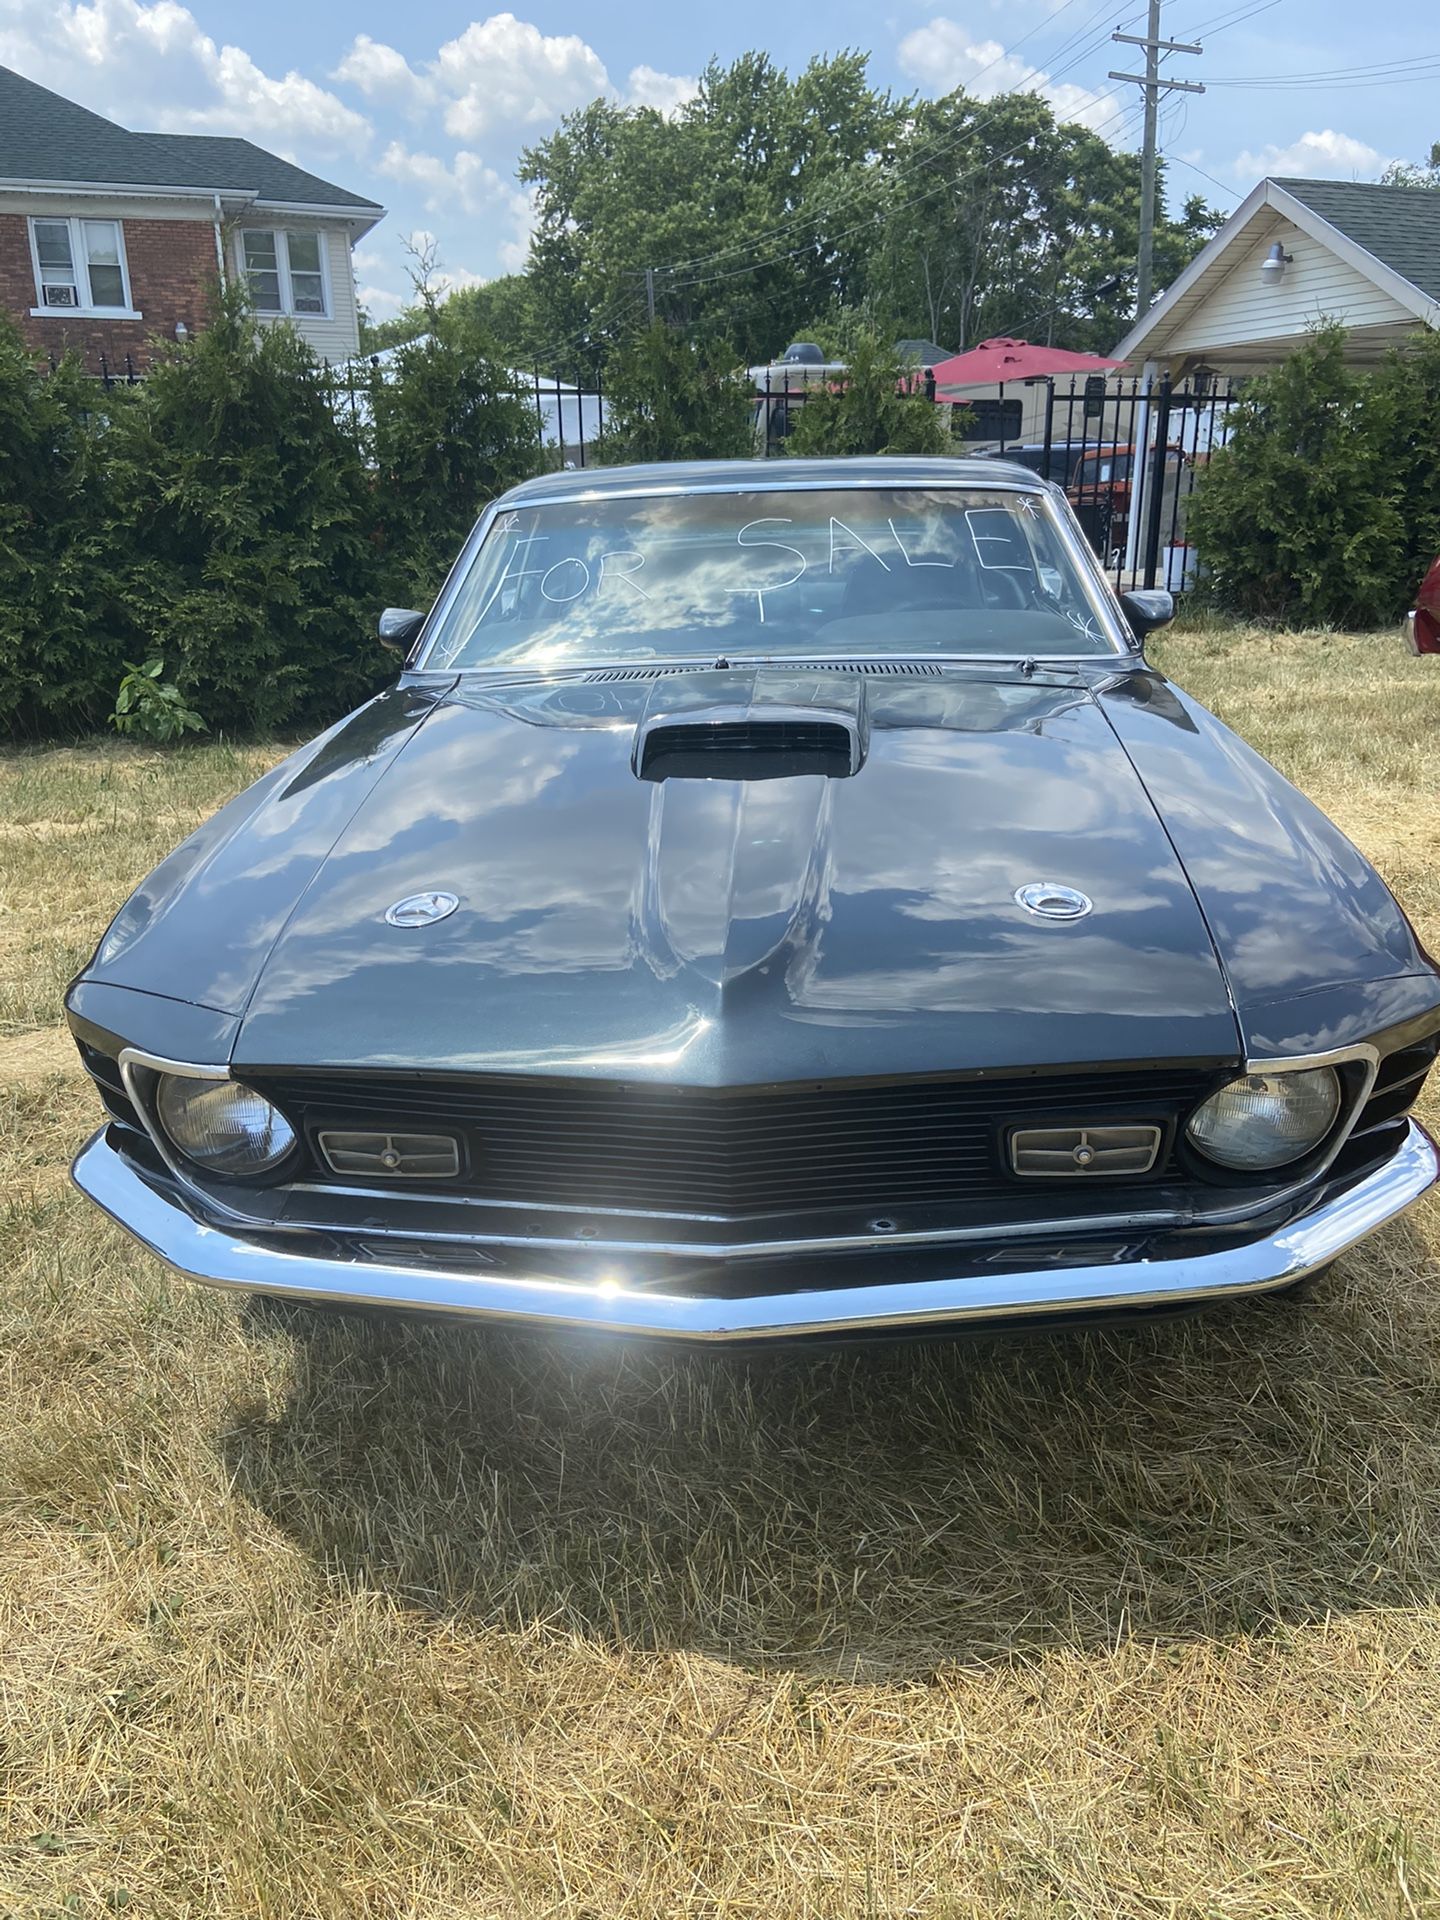 Old school Mustang